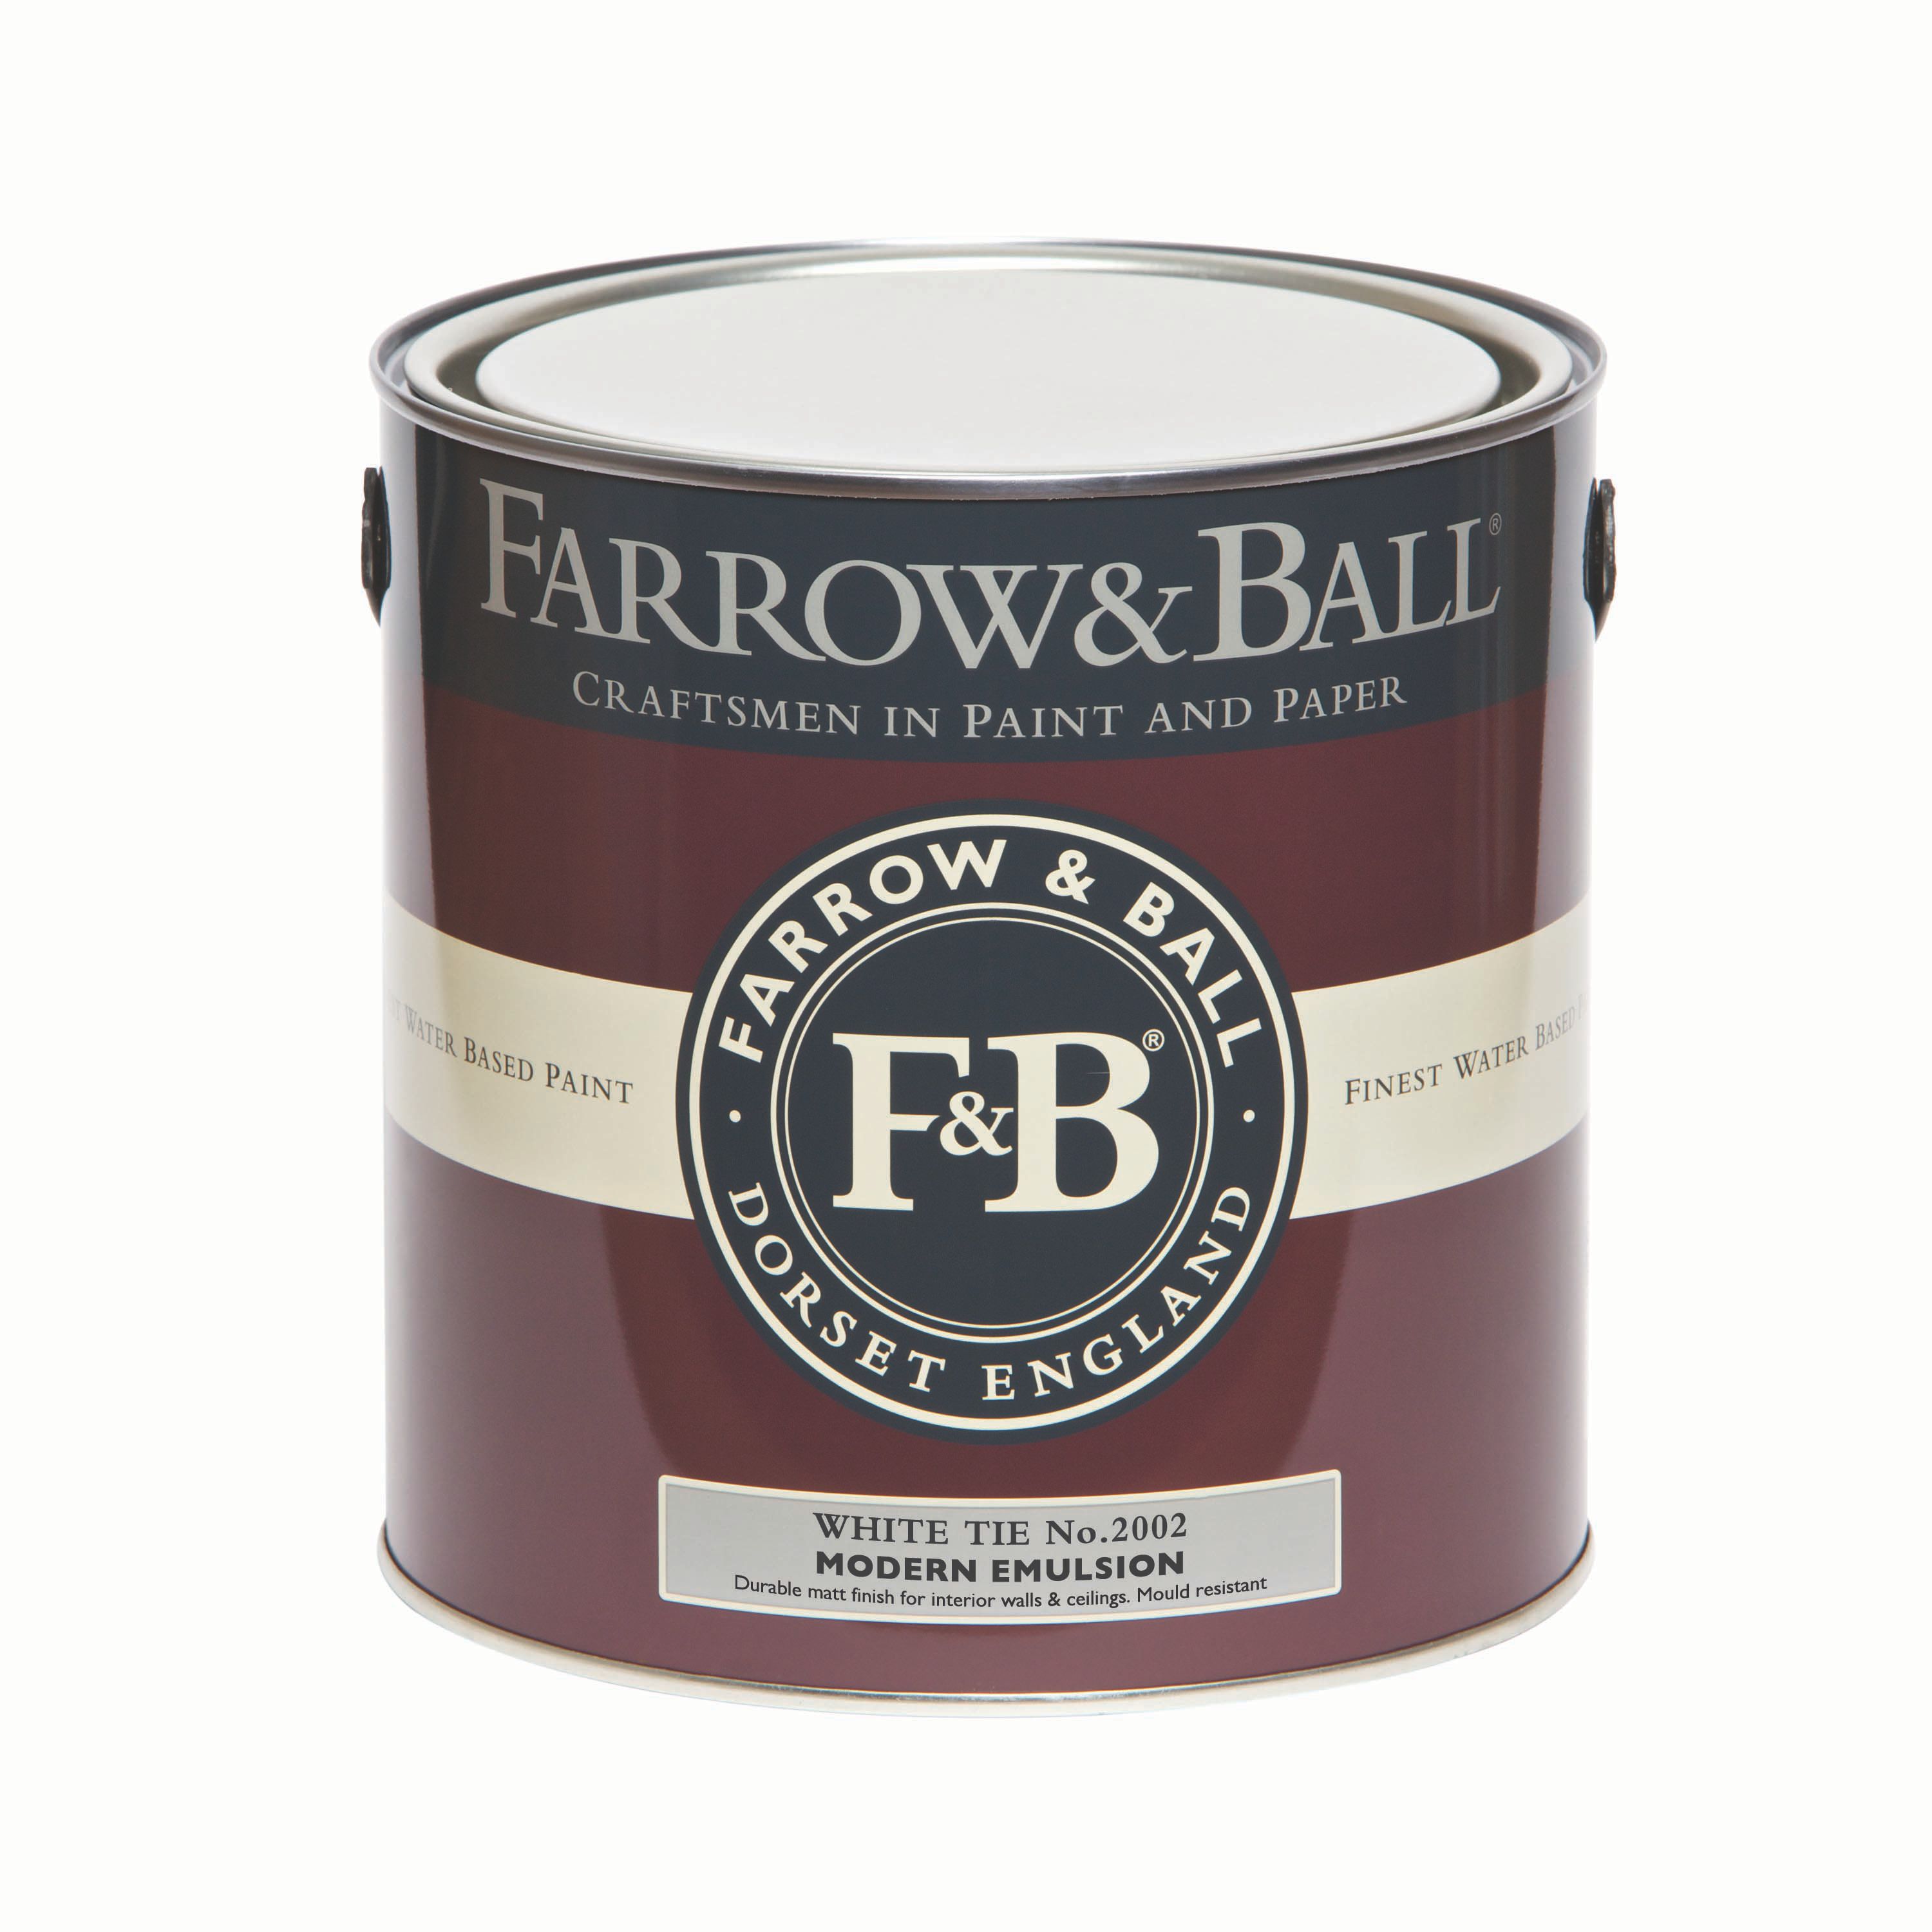 Farrow & Ball Modern White tie No.2002 Matt Emulsion paint, 2.5L